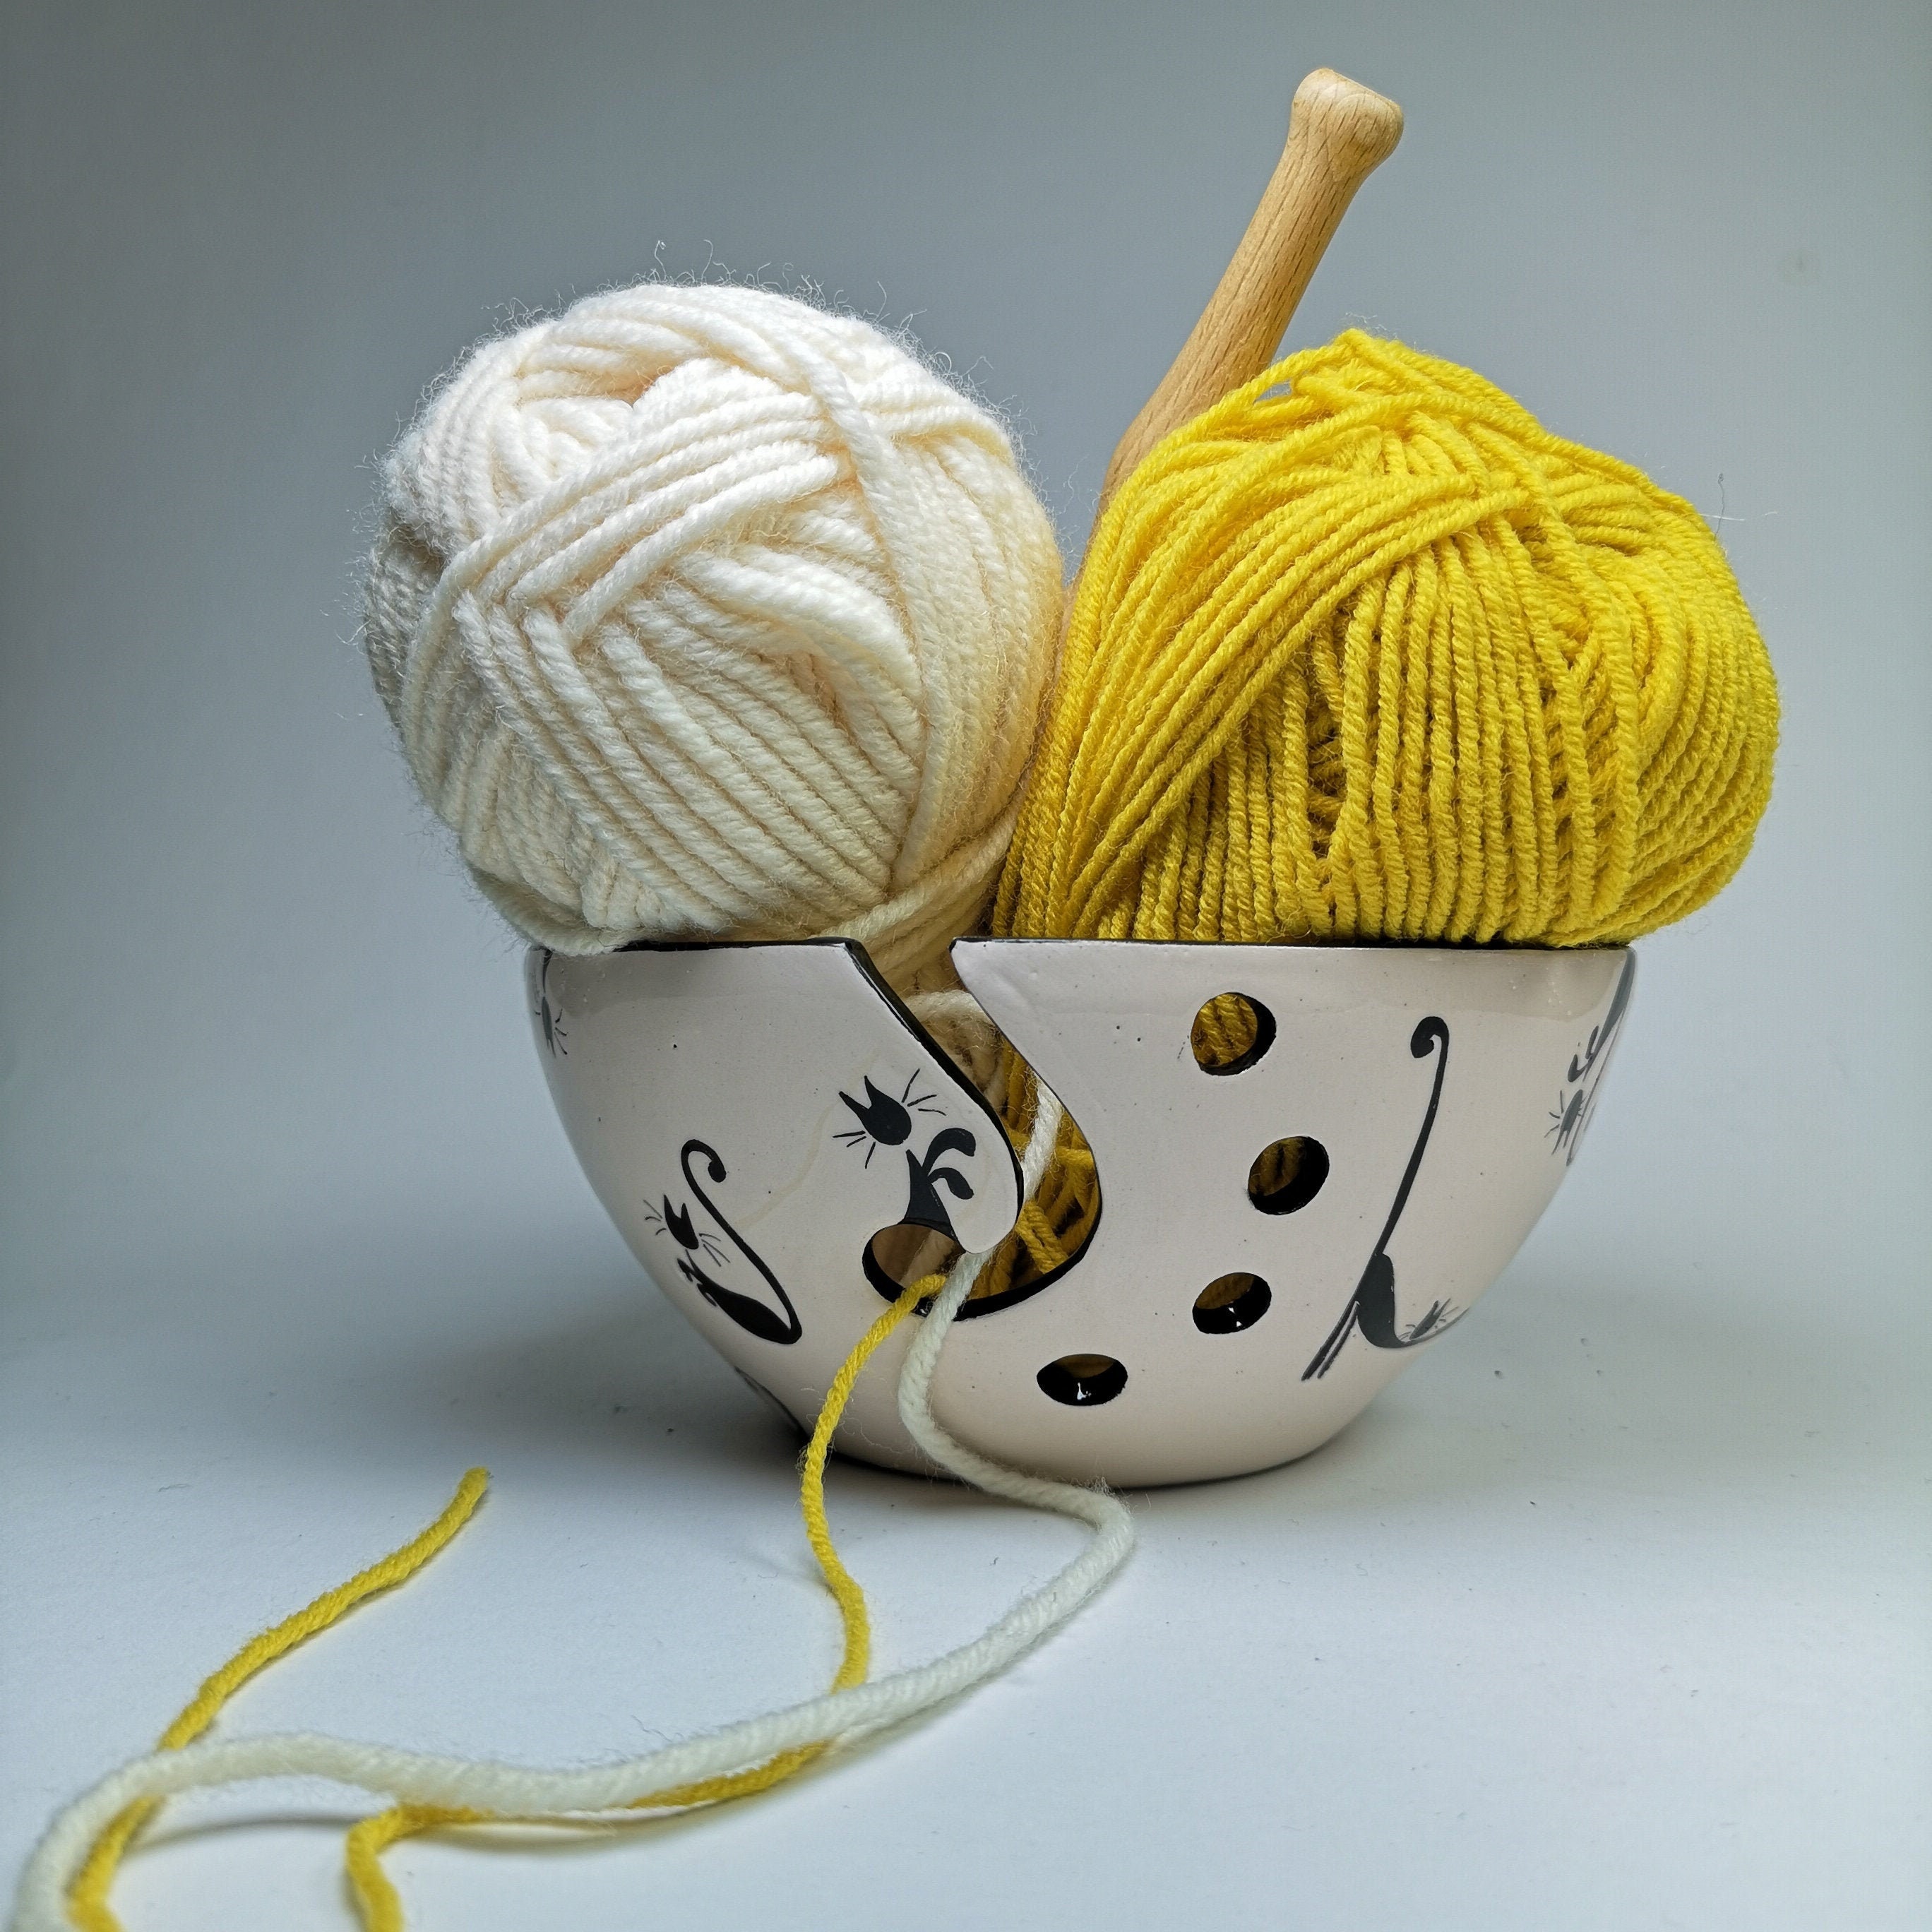 Handpainted Cat Yarn Bowlceramic Knitting Bowlyarn Bowl With Swirled  Holesknitting and Crochetcat Bowlyarn Holderyarn Organizer -  Israel